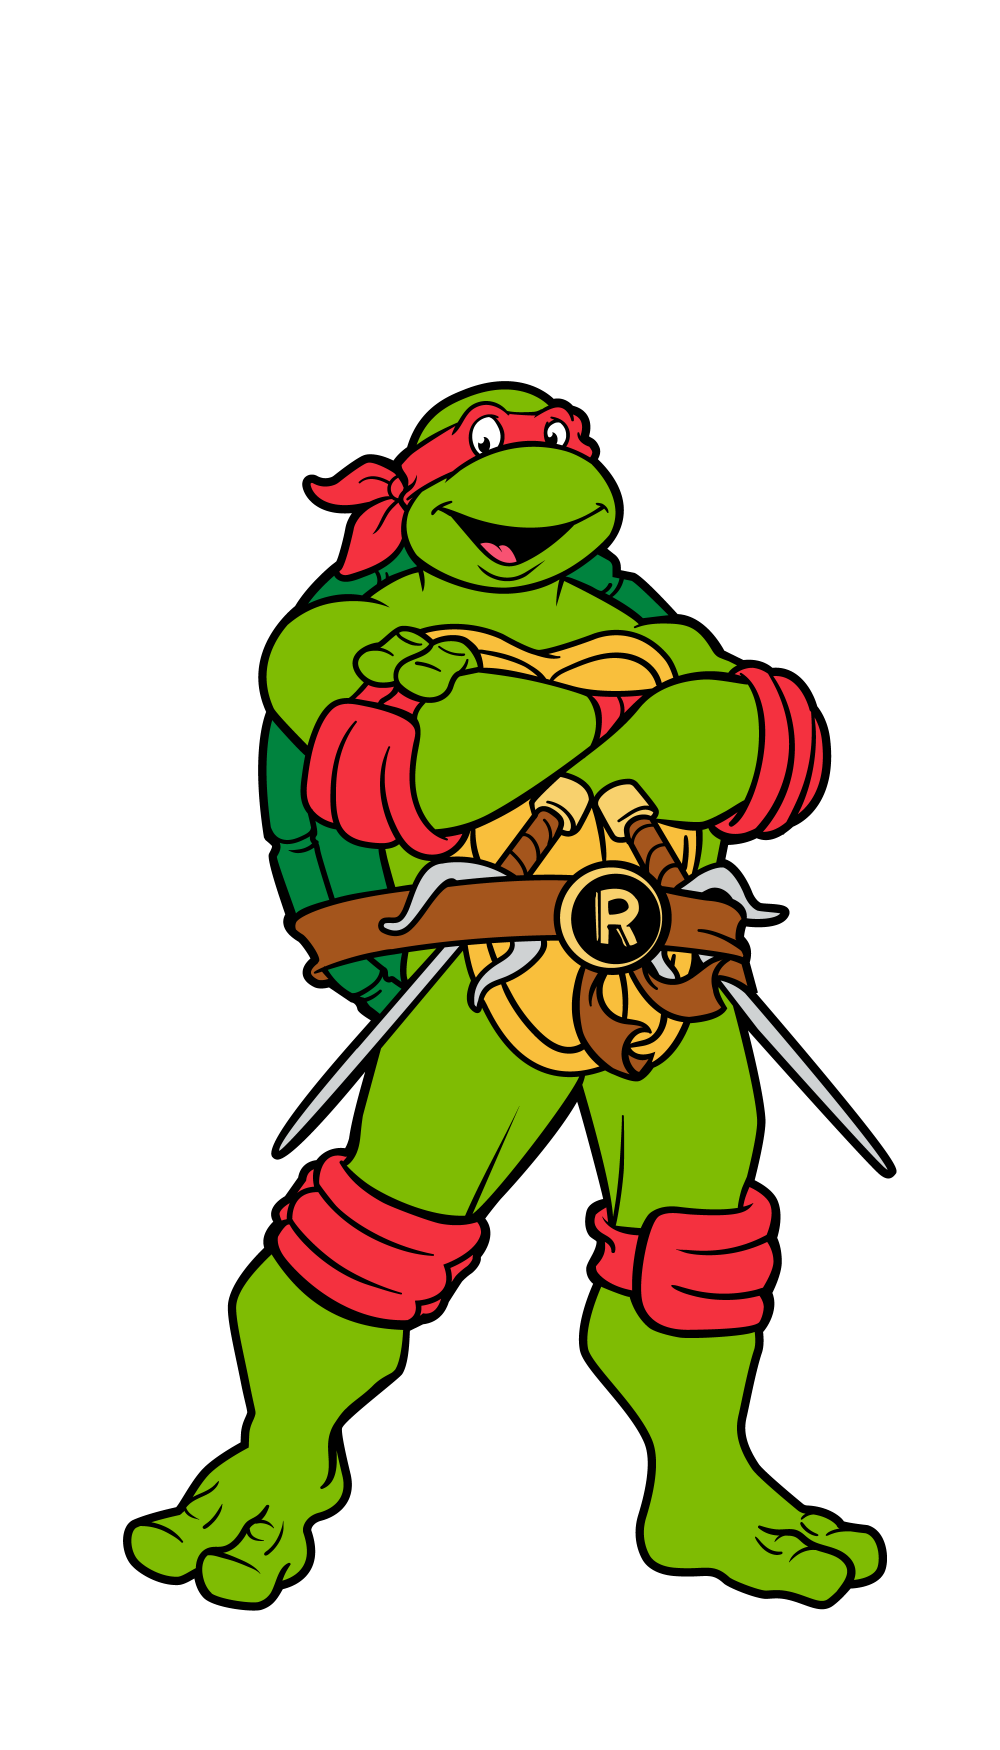 Raphael (569)